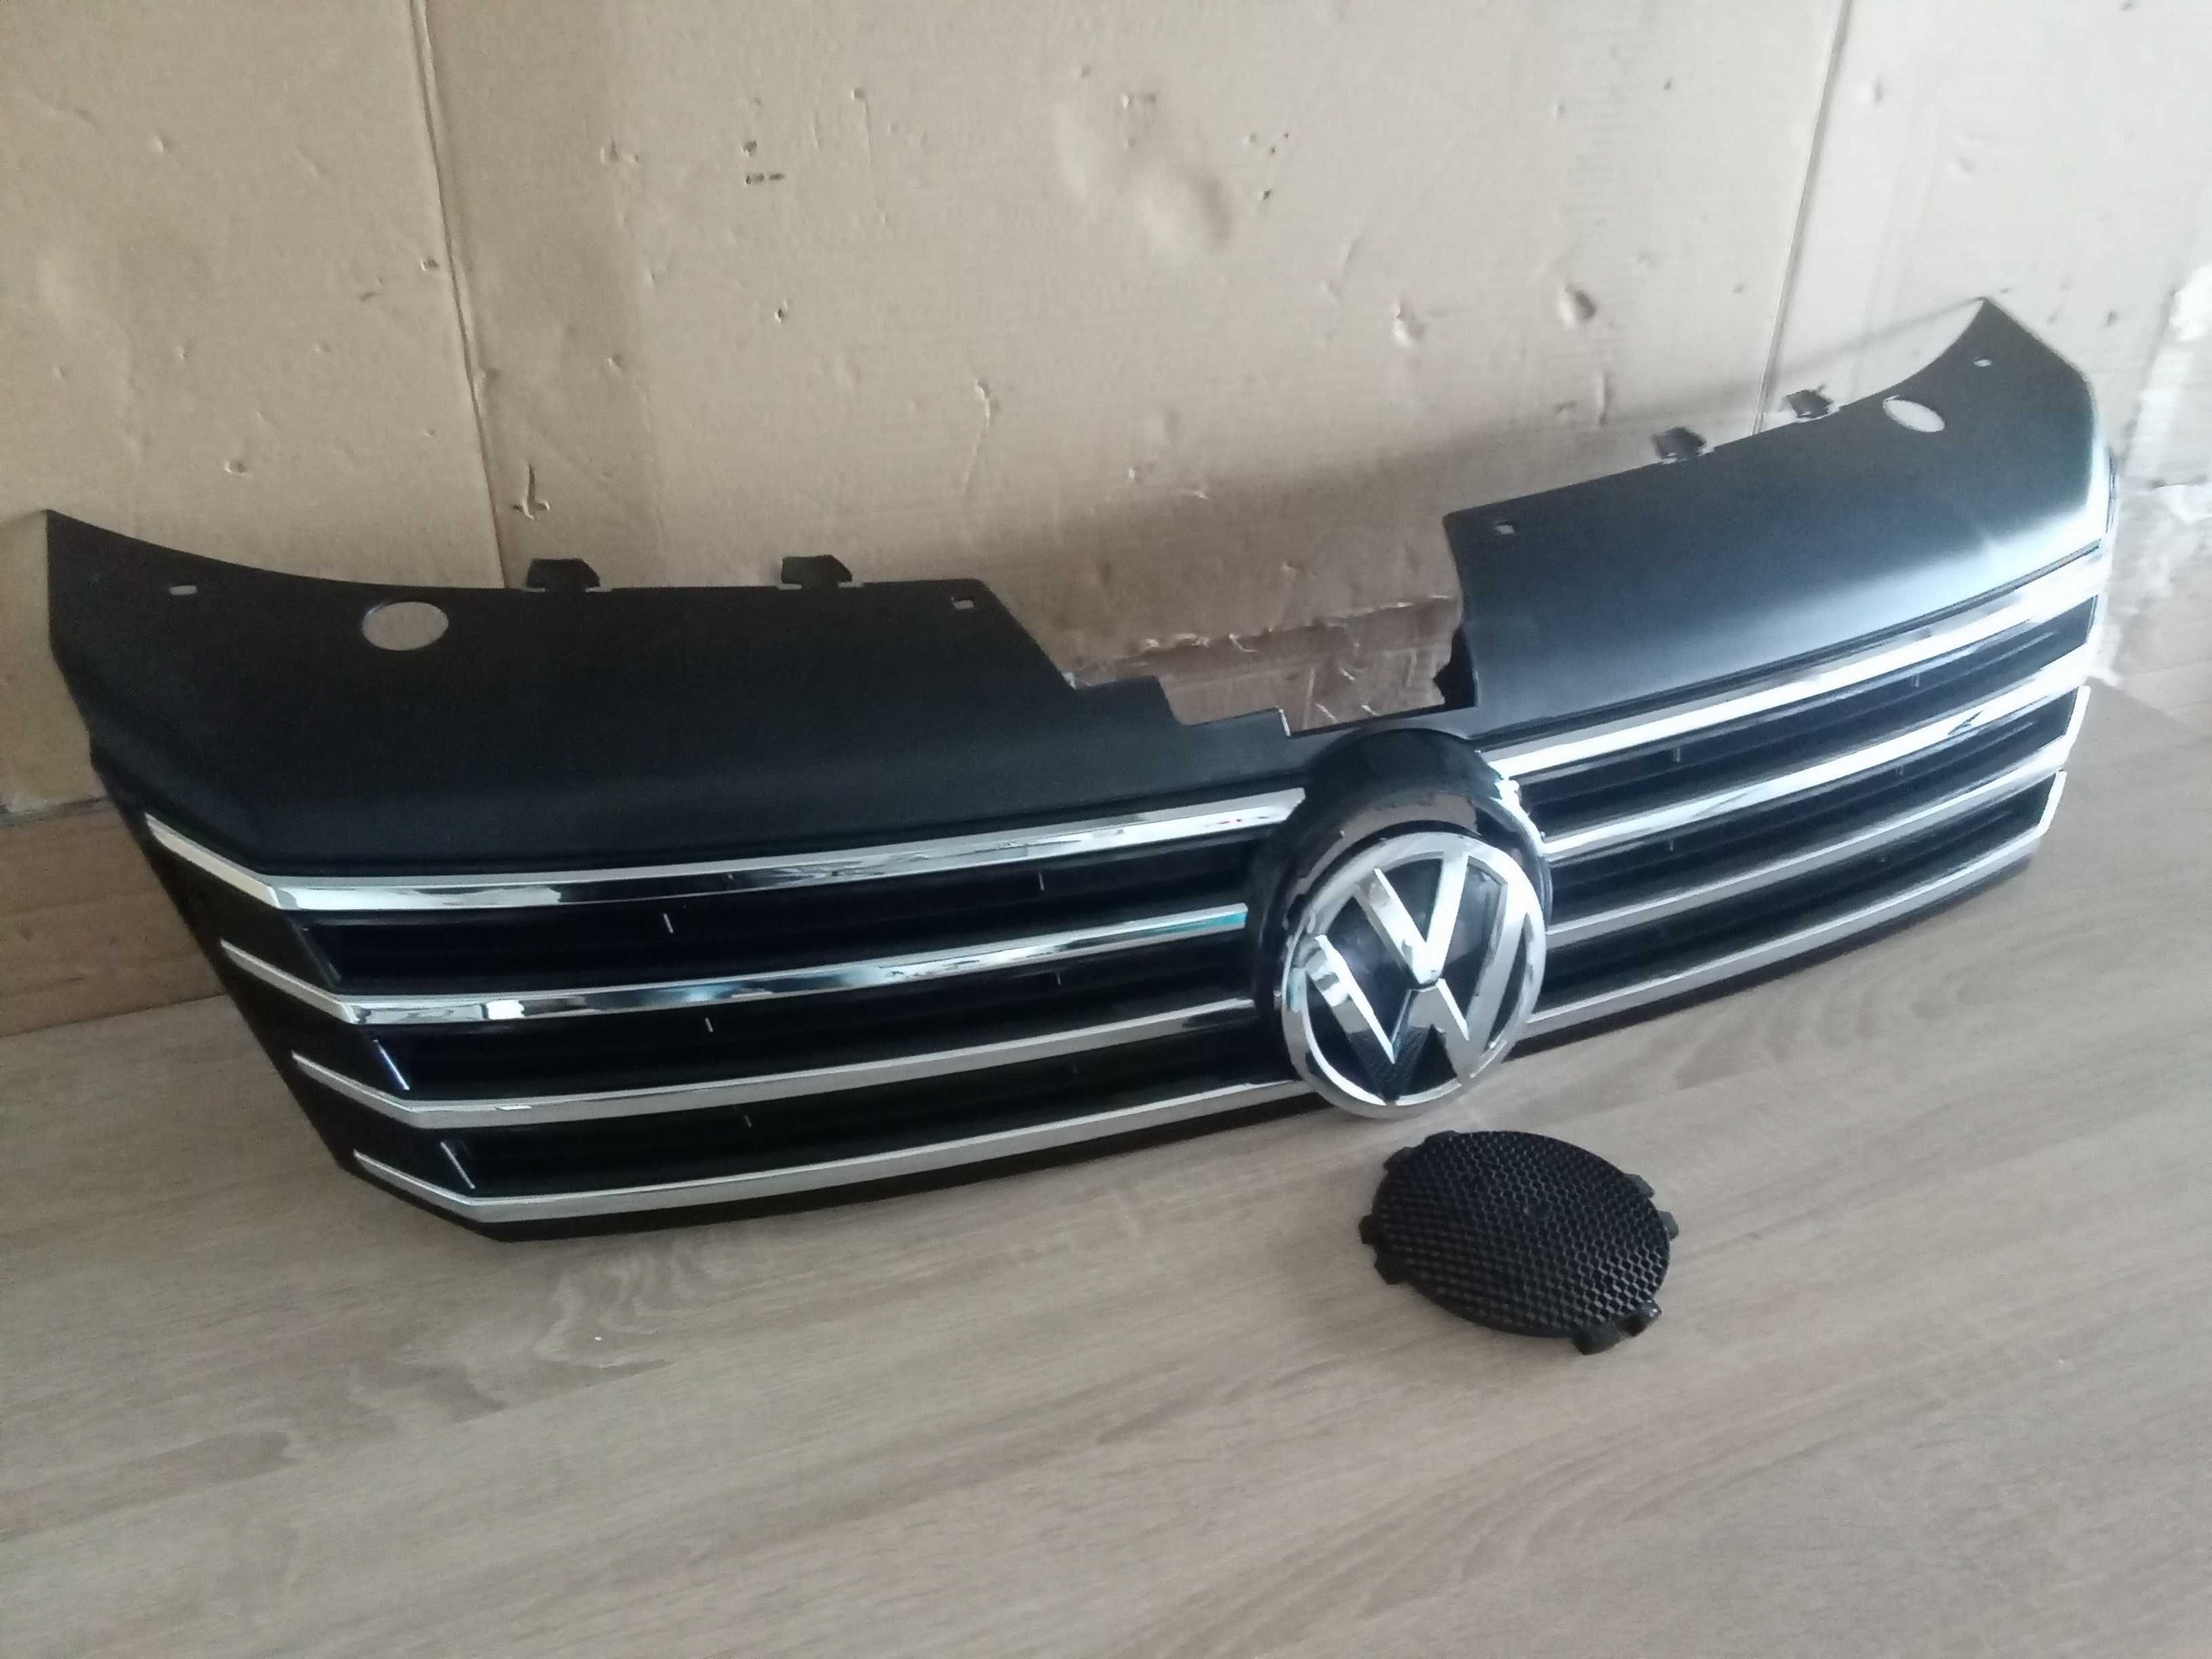 Grila masca radiator fata cu emblema  VW Passat B7 10-2014 completa